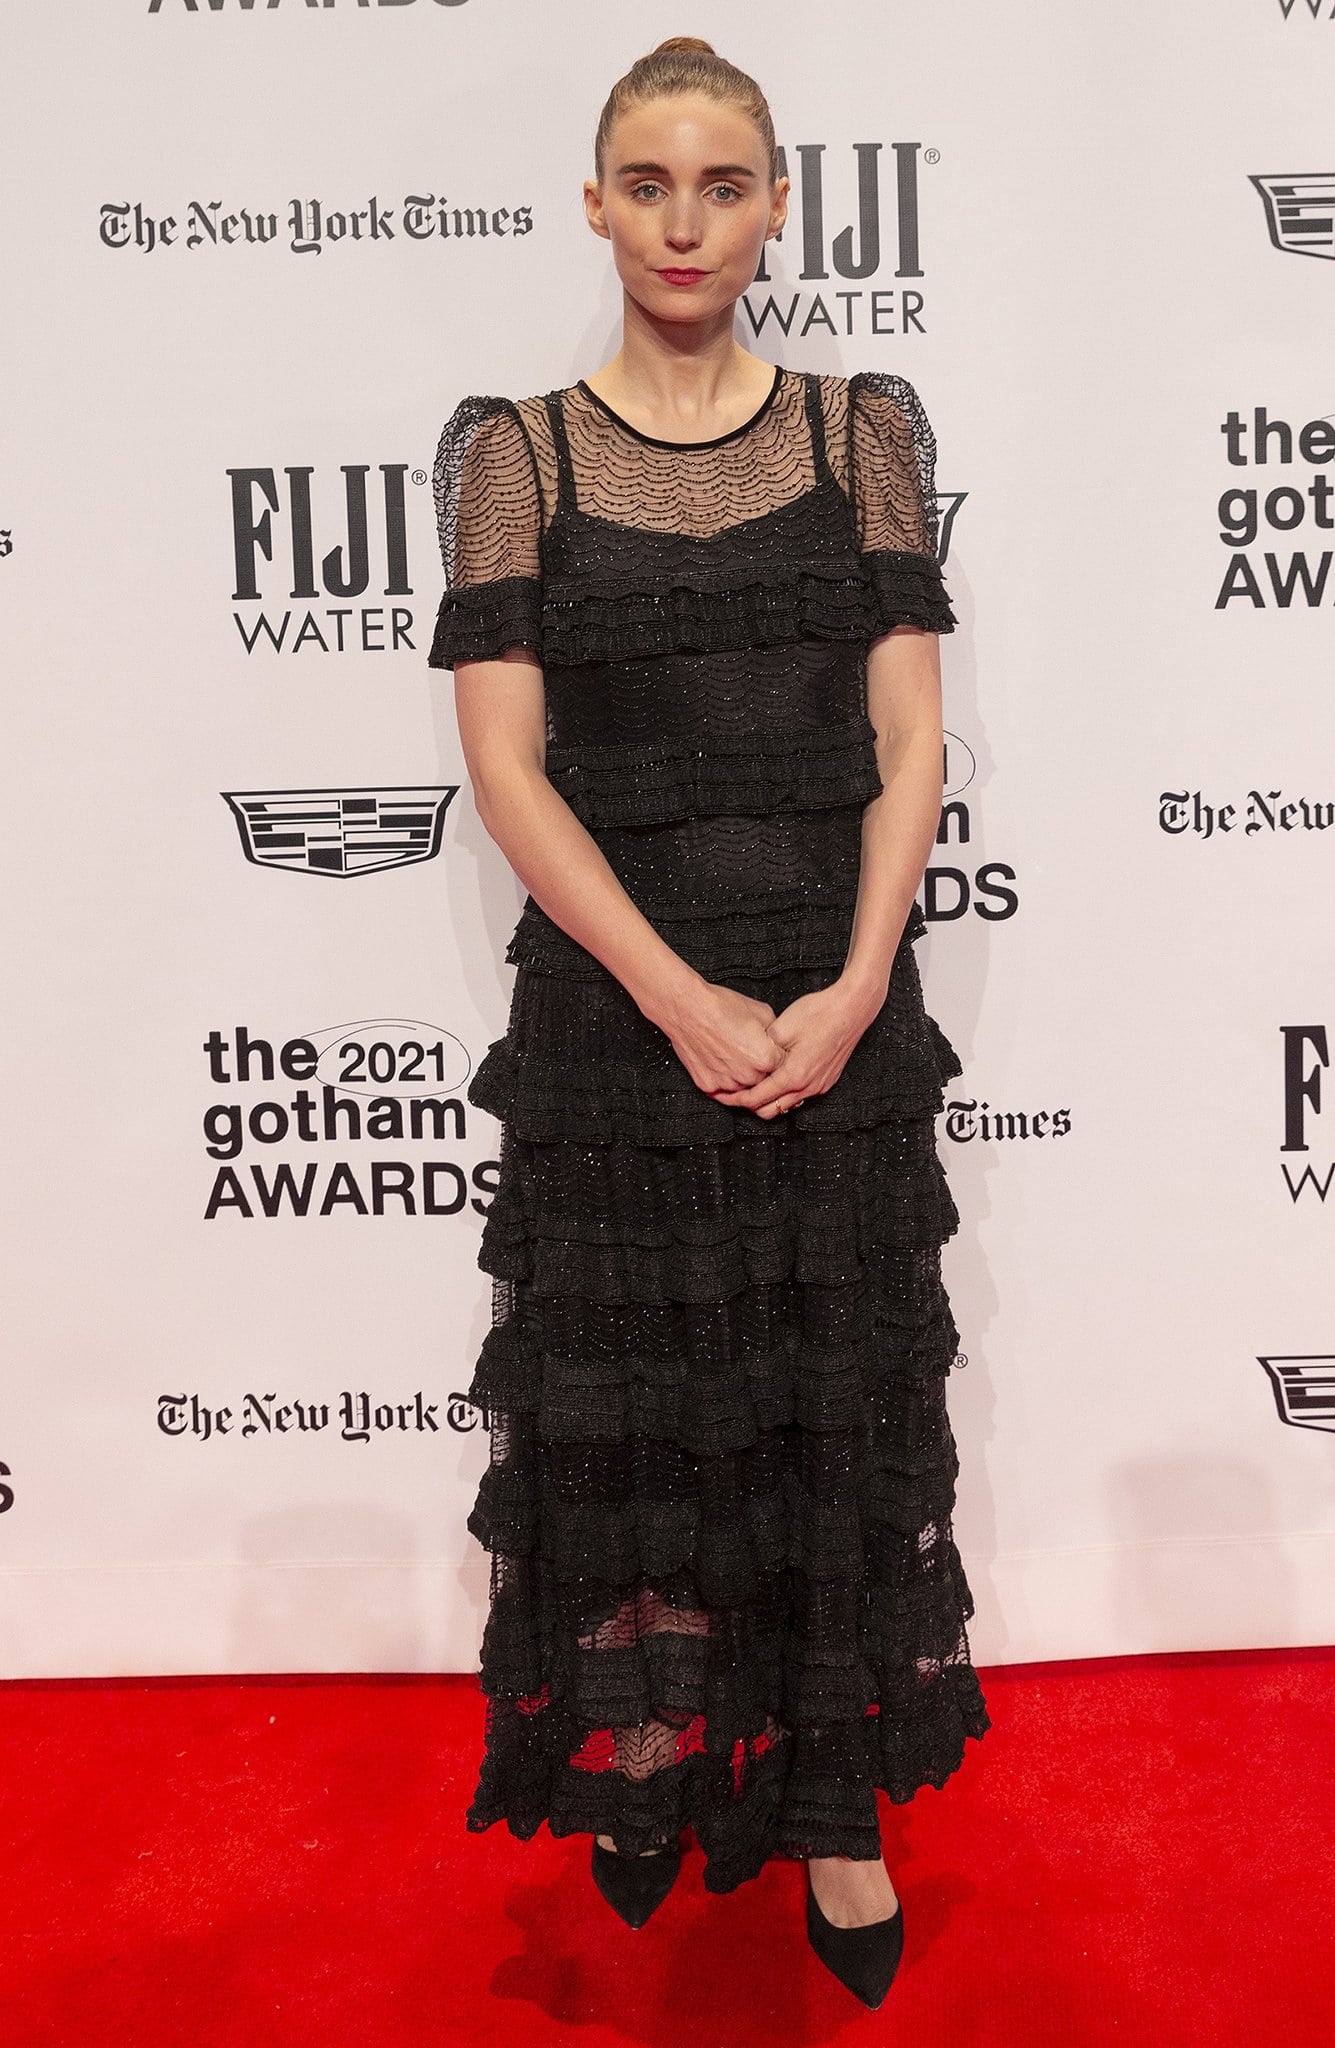 Rooney Mara at the 2021 Gotham Awards at Cipriani Wall Street in New York City on November 29, 2021